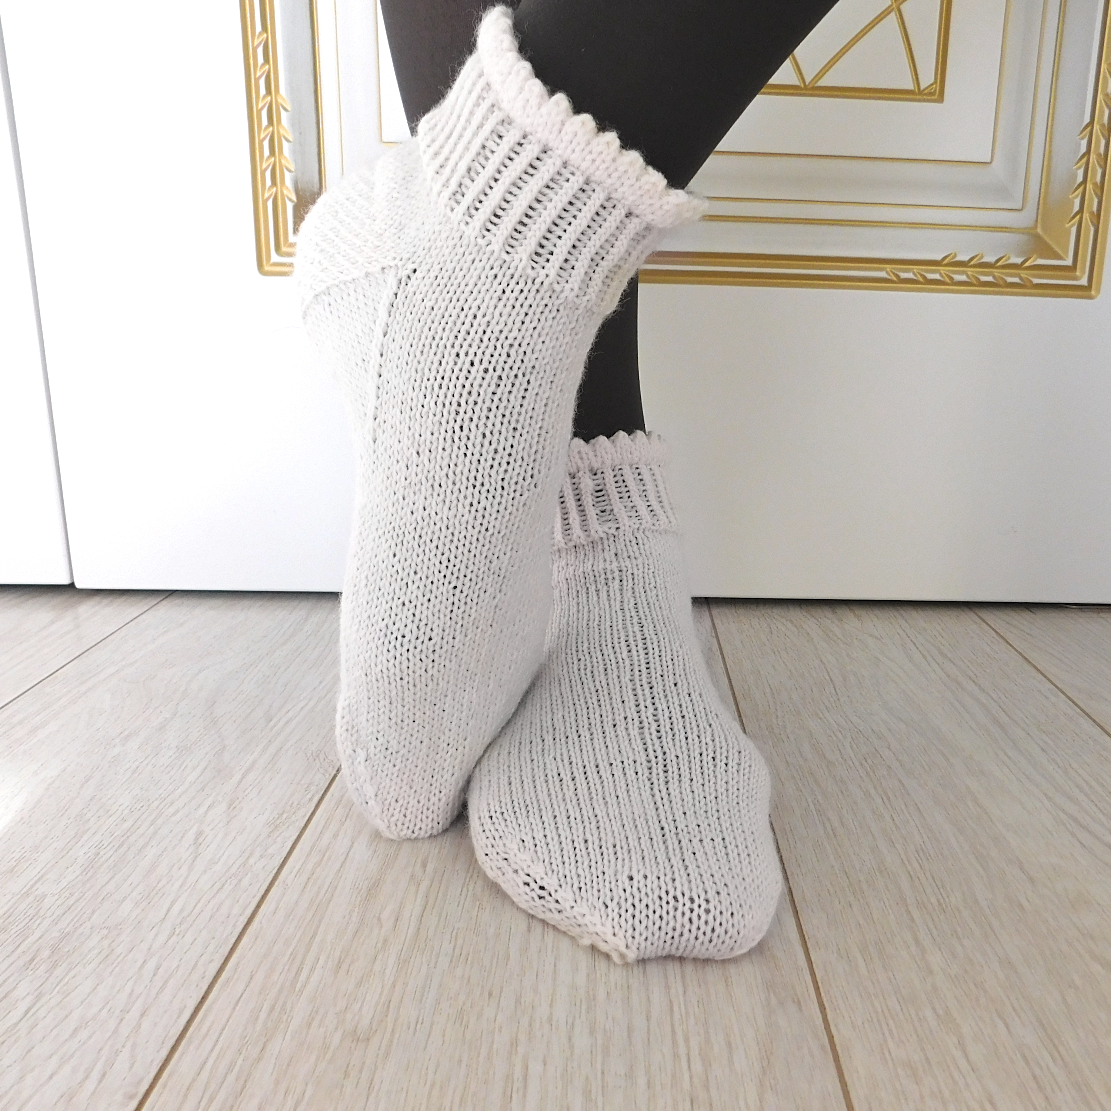 Knit women socks exclusive gifts for women